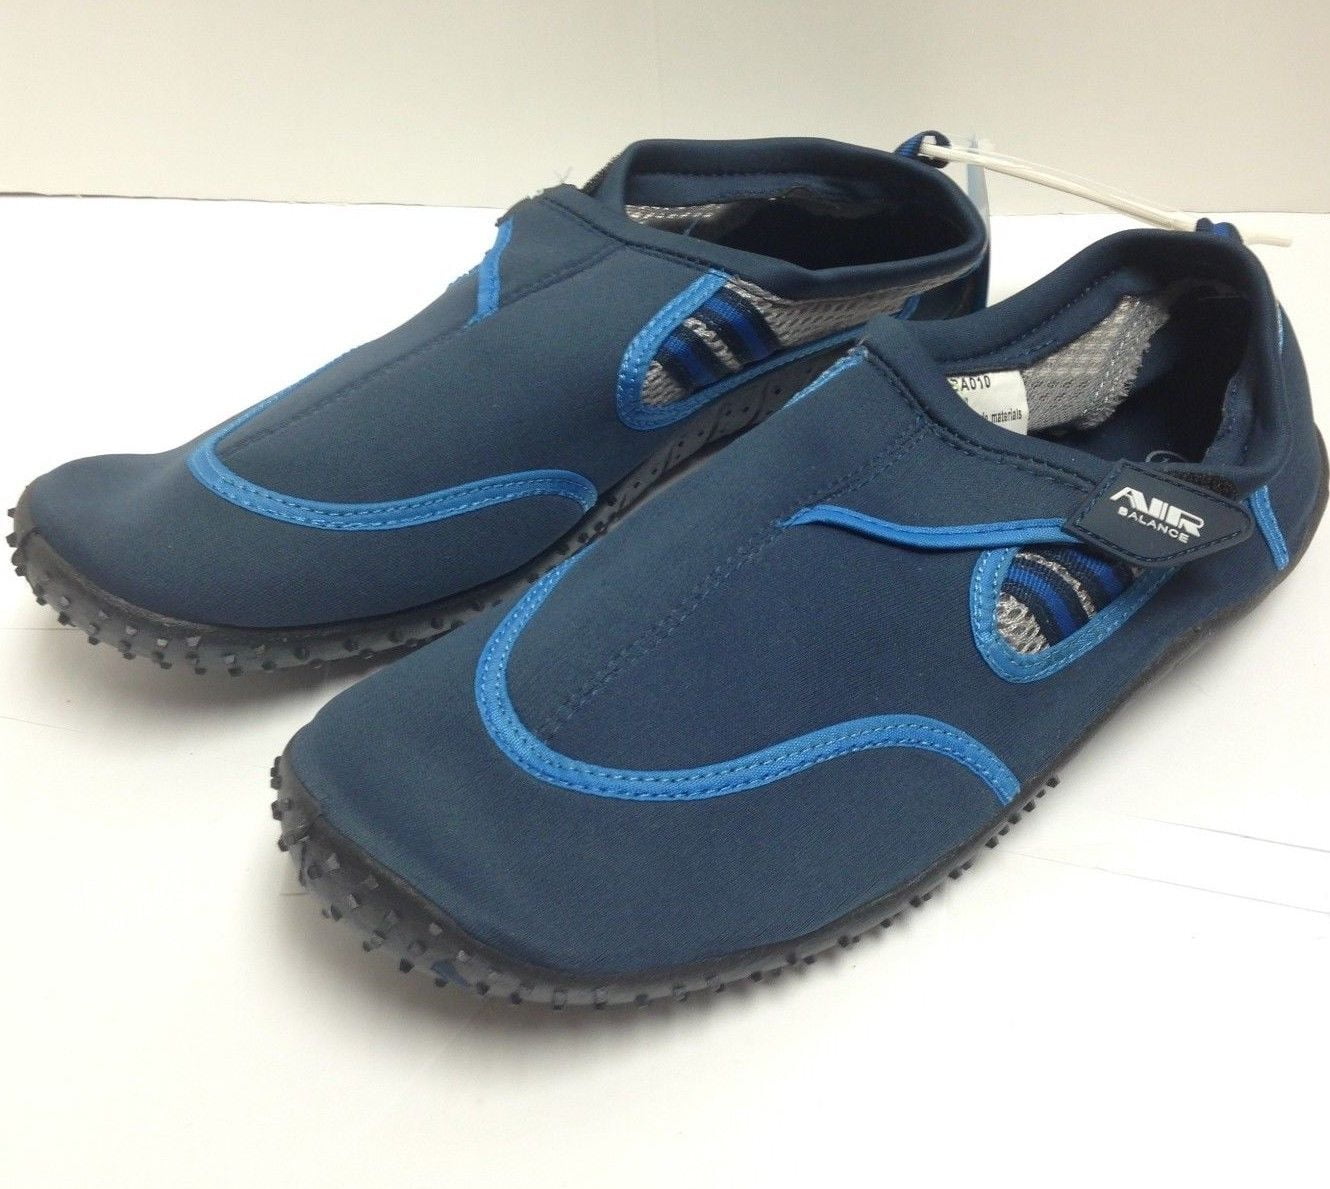 Air Balance - Air Balance Men's Aqua Water Shoes, Big Size 13-15, Black ...